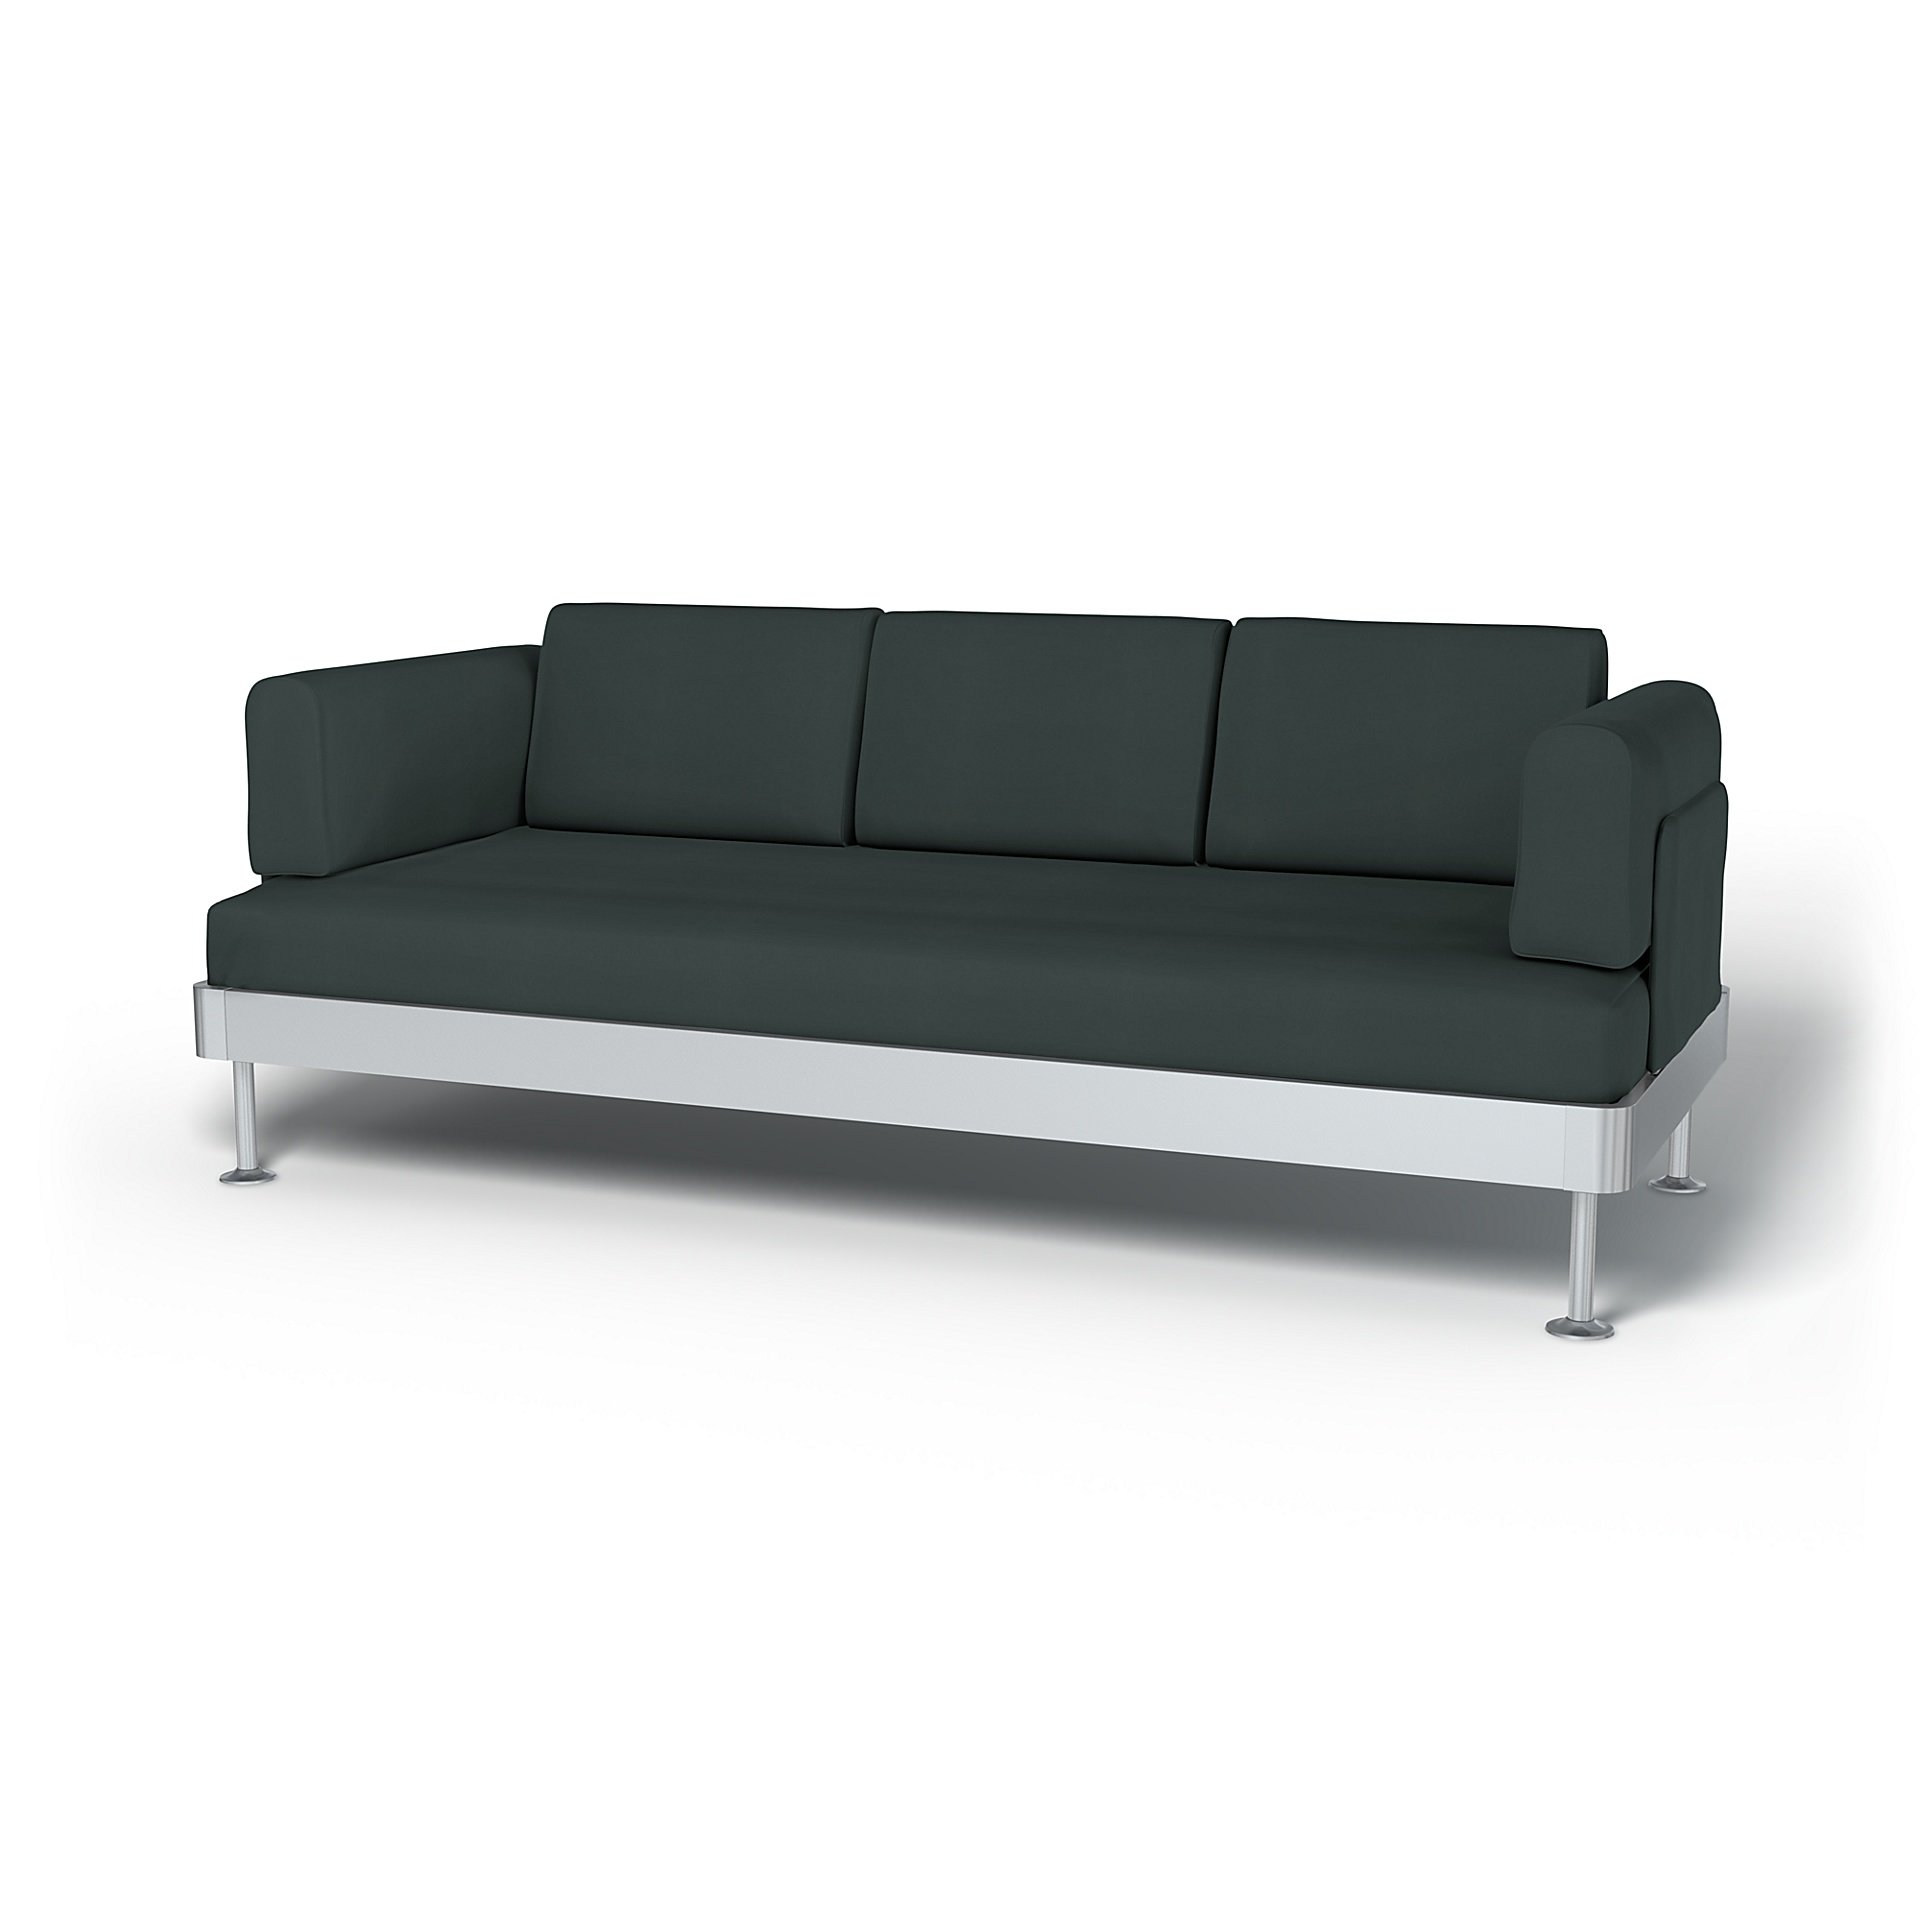 IKEA - Delaktig 3 Seater Sofa Cover, Graphite Grey, Cotton - Bemz